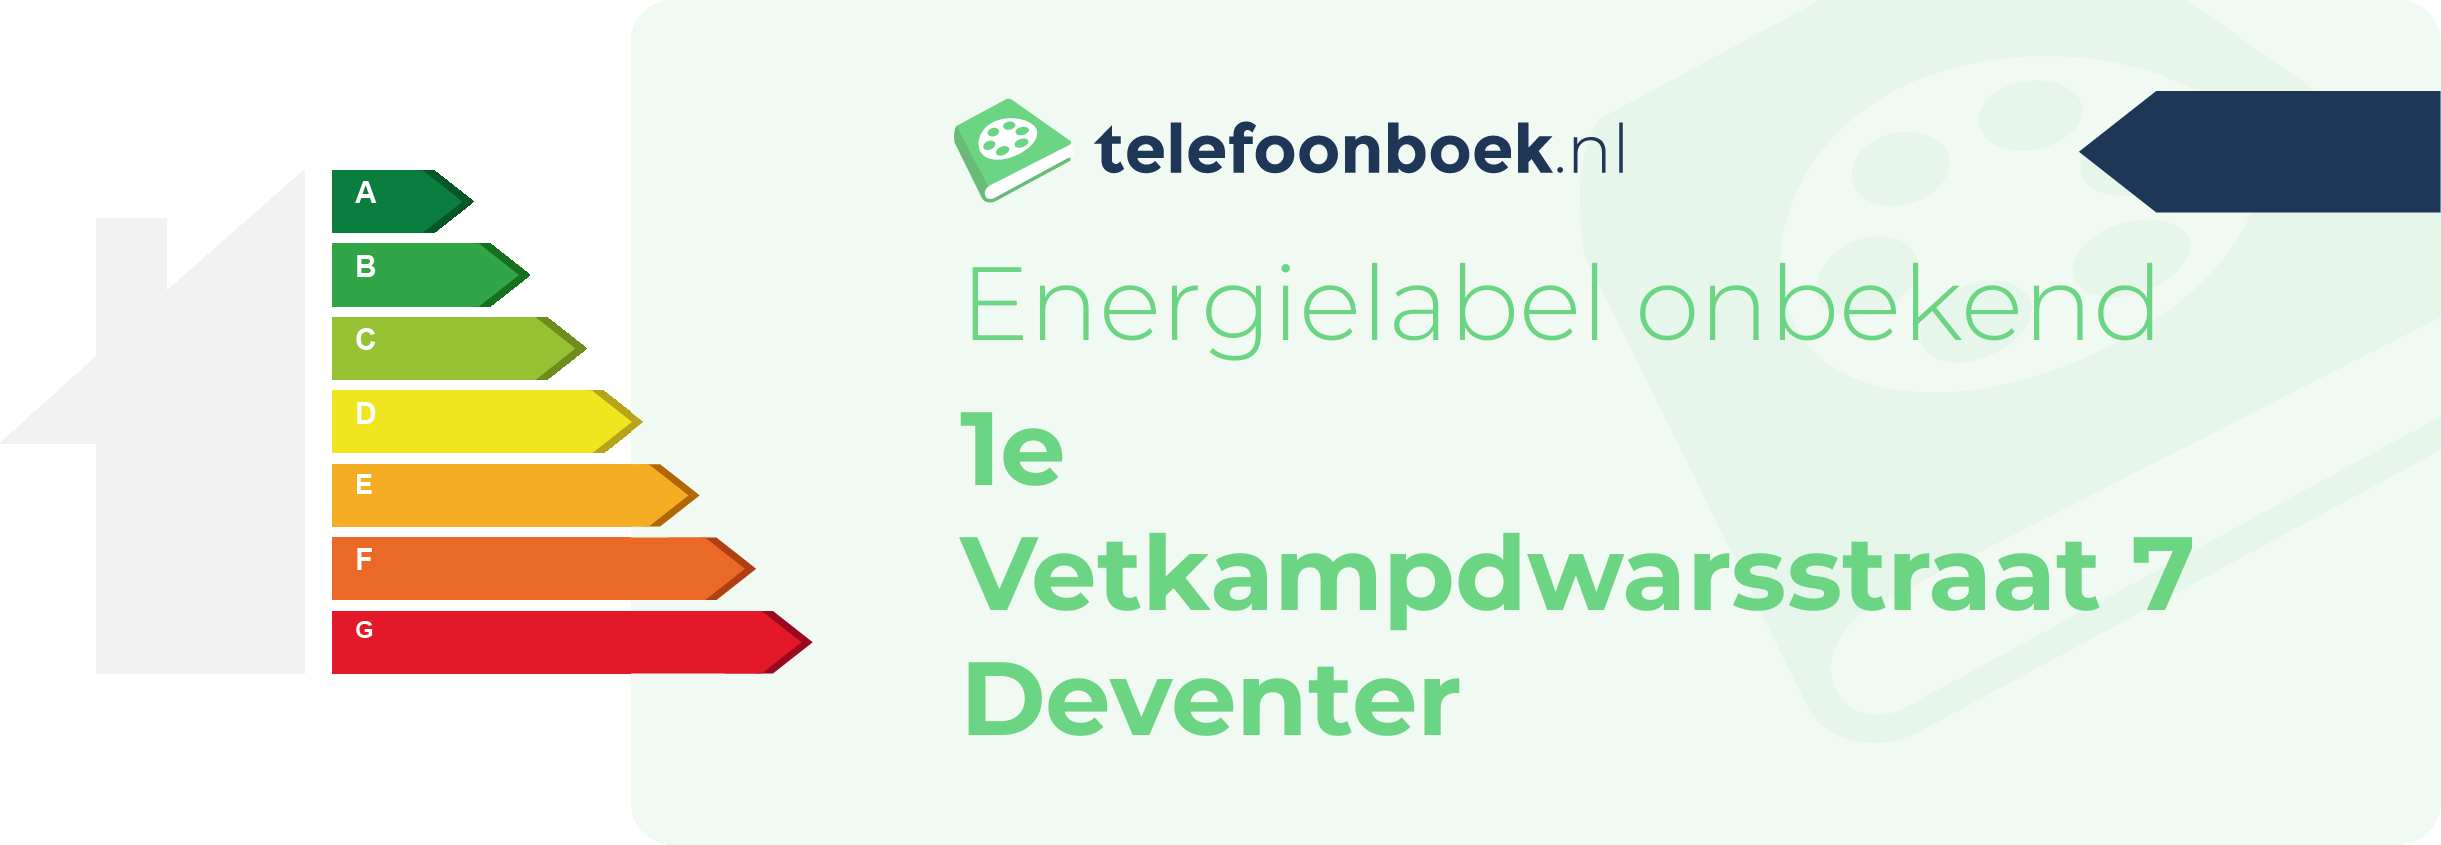 Energielabel 1e Vetkampdwarsstraat 7 Deventer